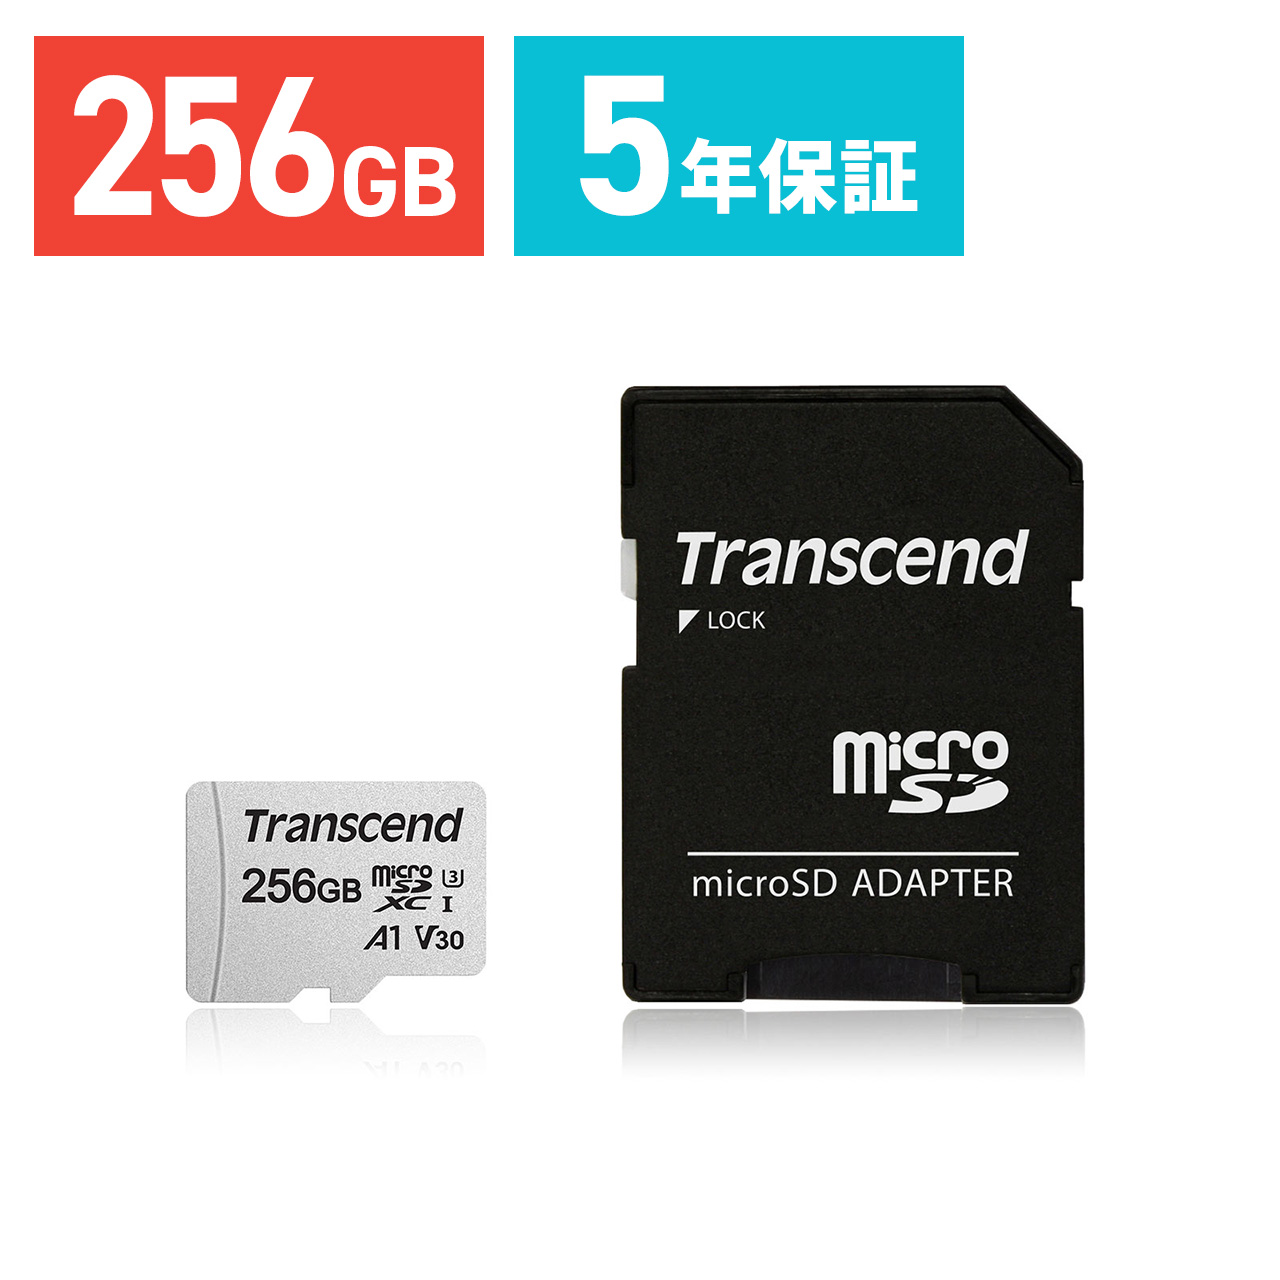 microSDXCカード 256GB Class10 UHS-I U3 U1 V30 A1 SD変換アダプタ付き Nintendo Switch ROG Ally 対応 Transcend製 TS256GUSD300S-A